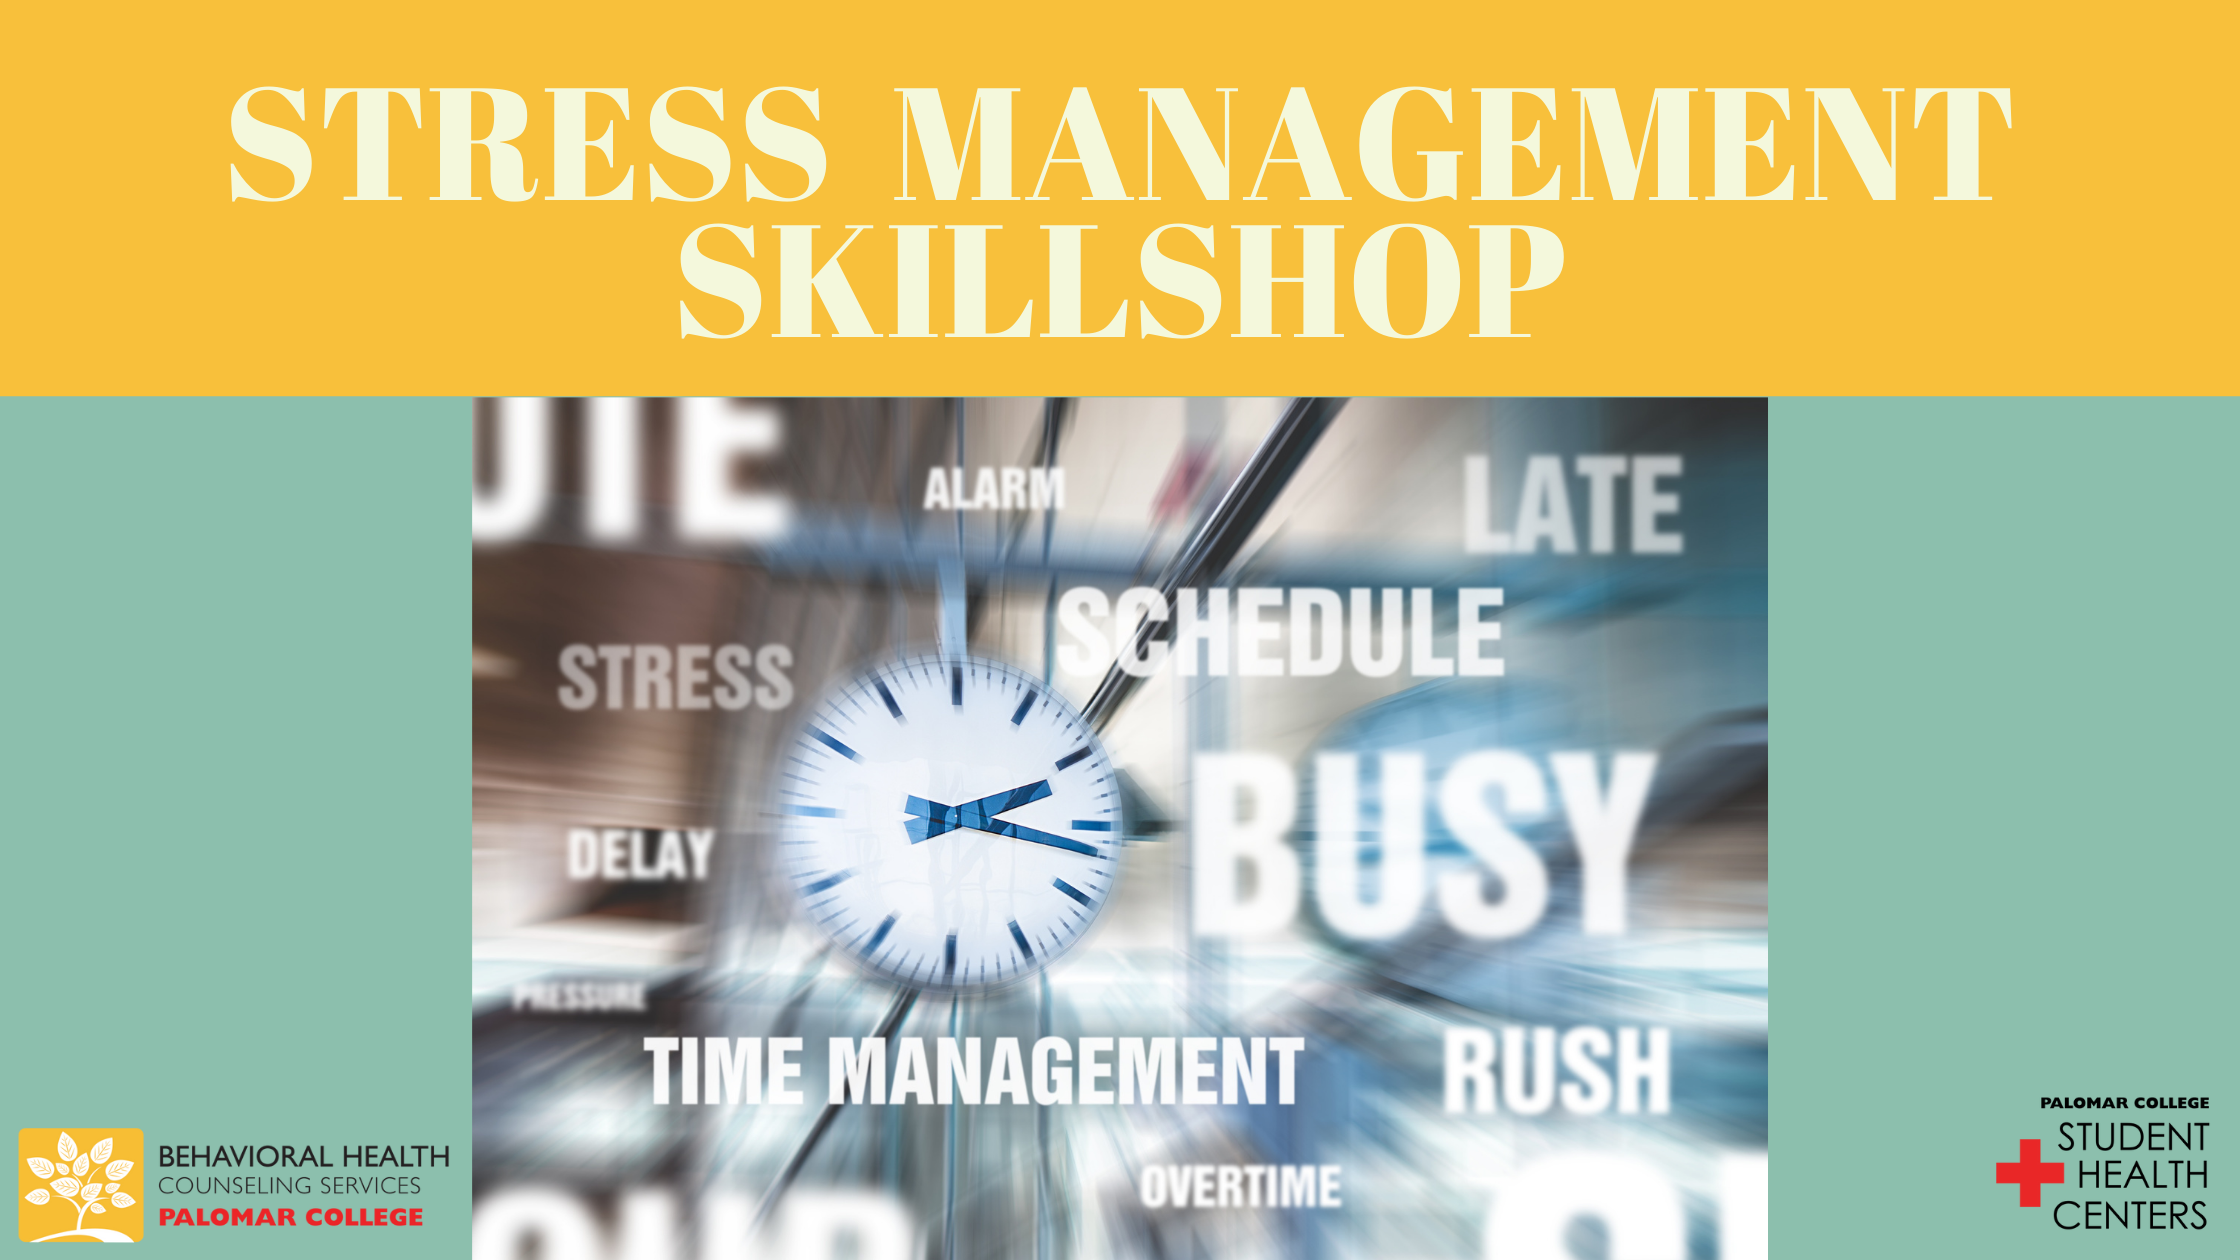 Stress Management skillshop